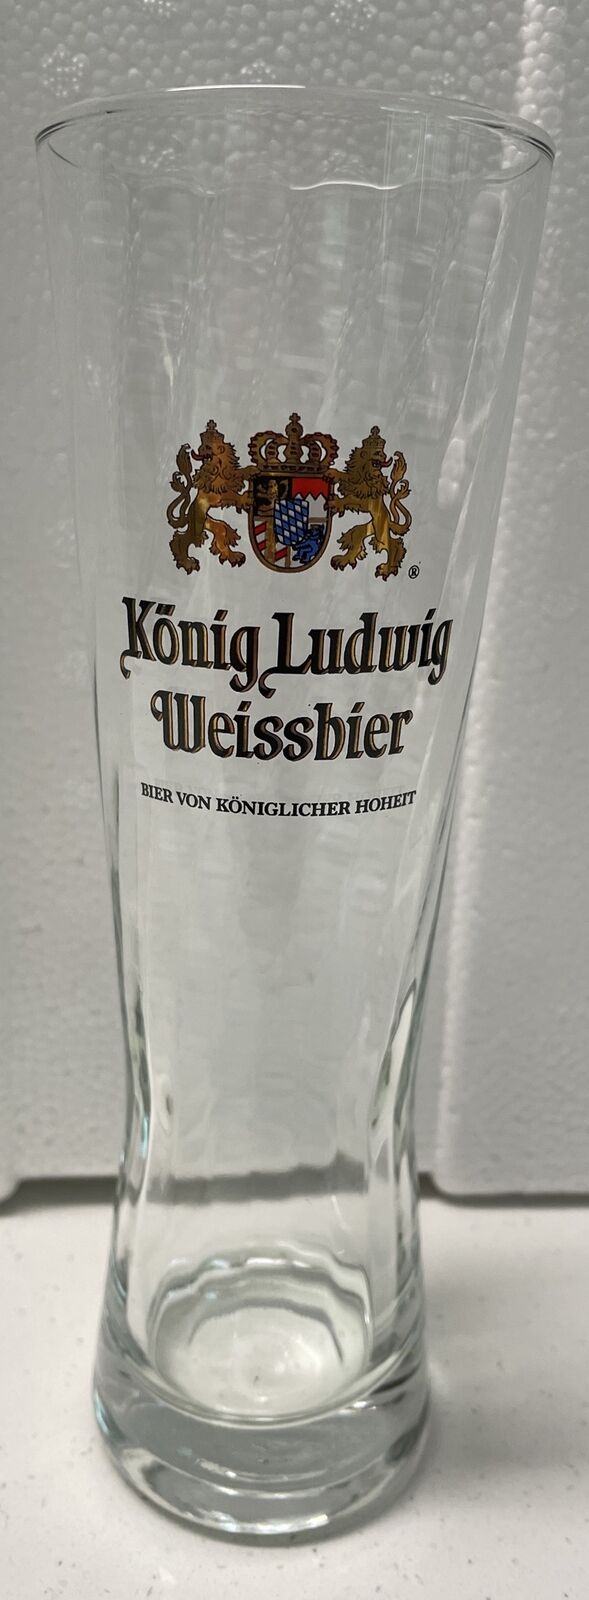 Konig Ludwig Weissbier 0.3L Swirled Glass by Sohm - Mint Condition